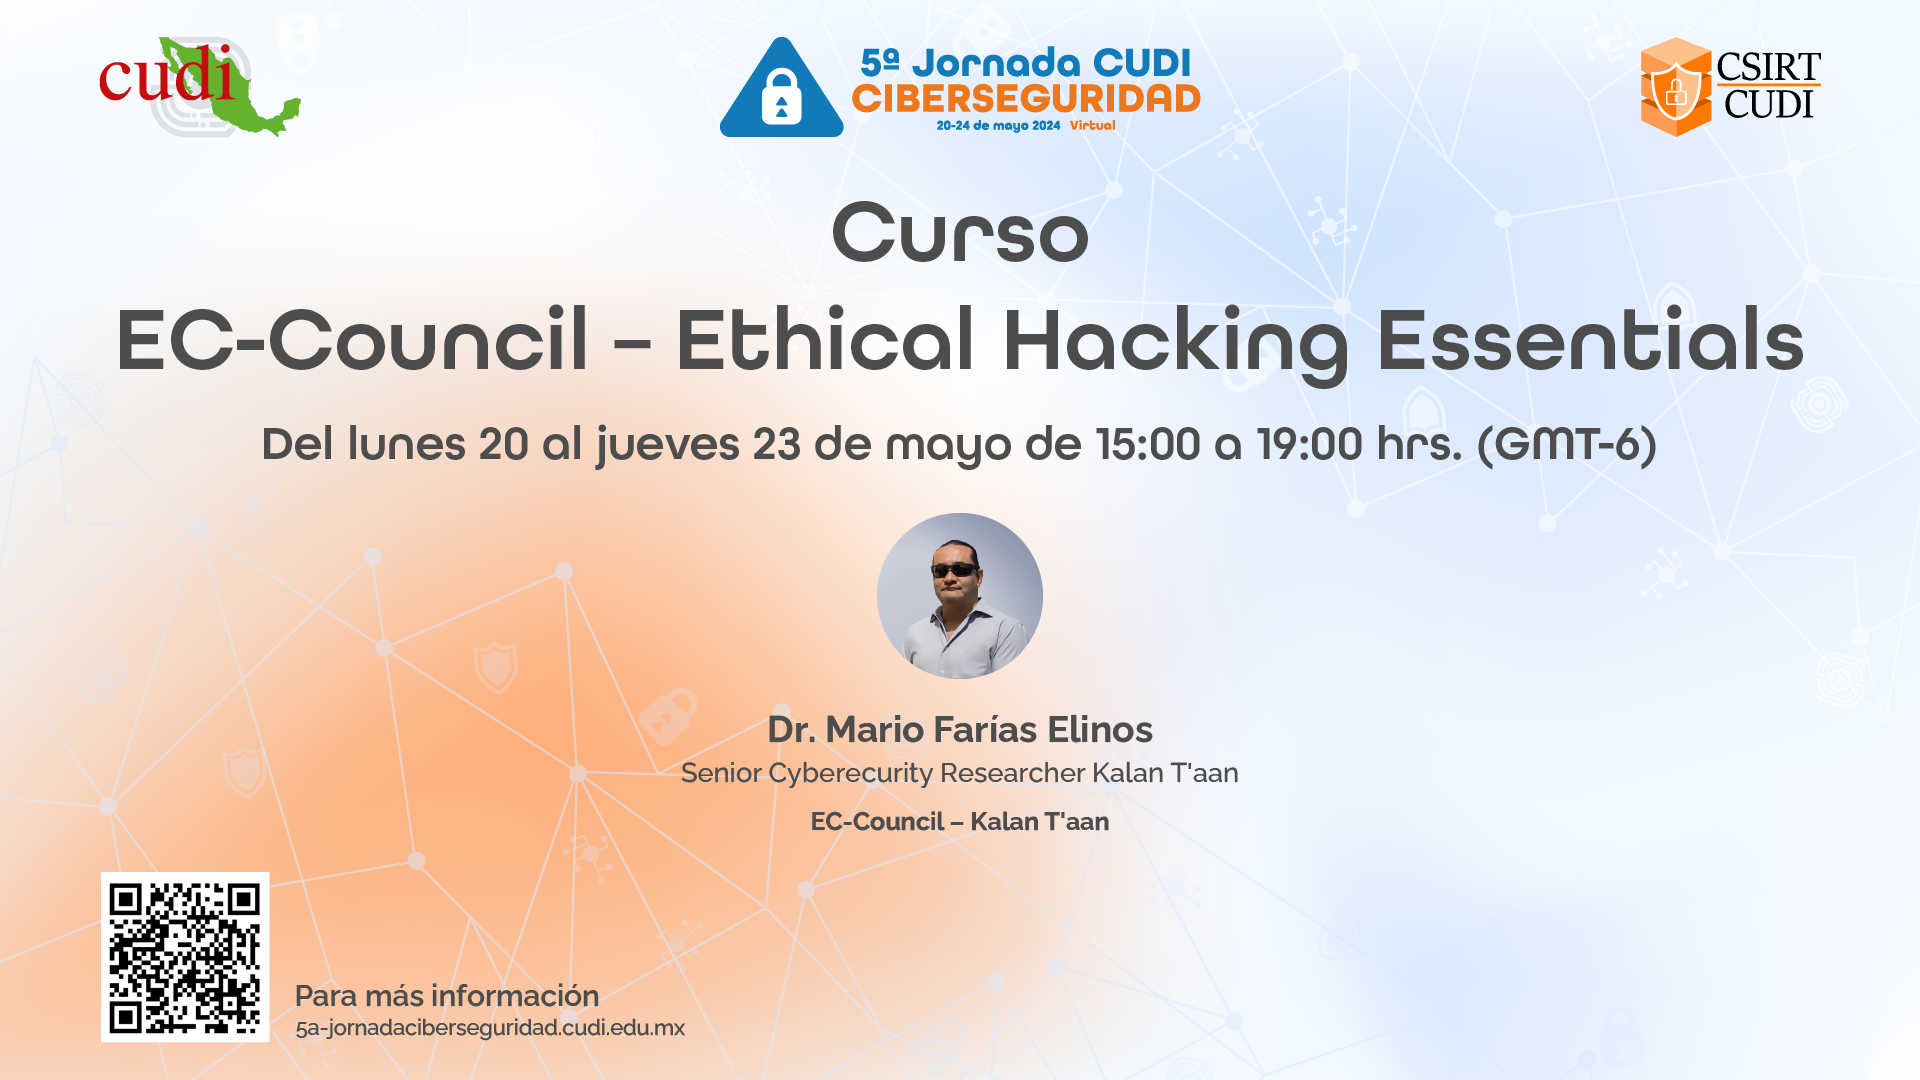 EC-Council Ethical Hacking Essentials